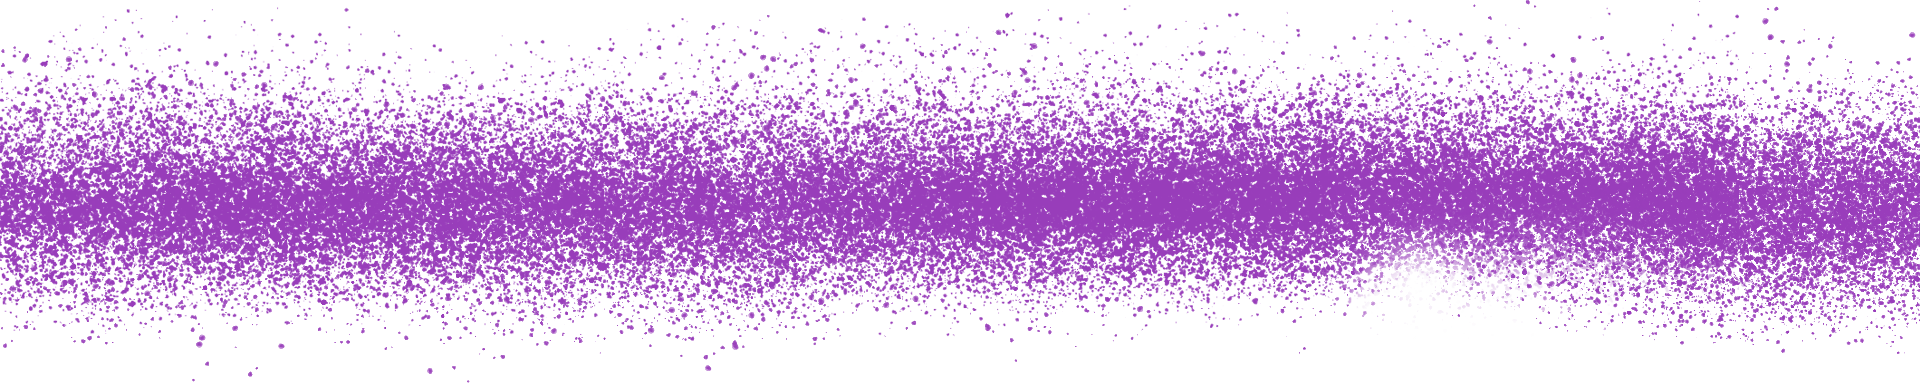 section divider purple desktop